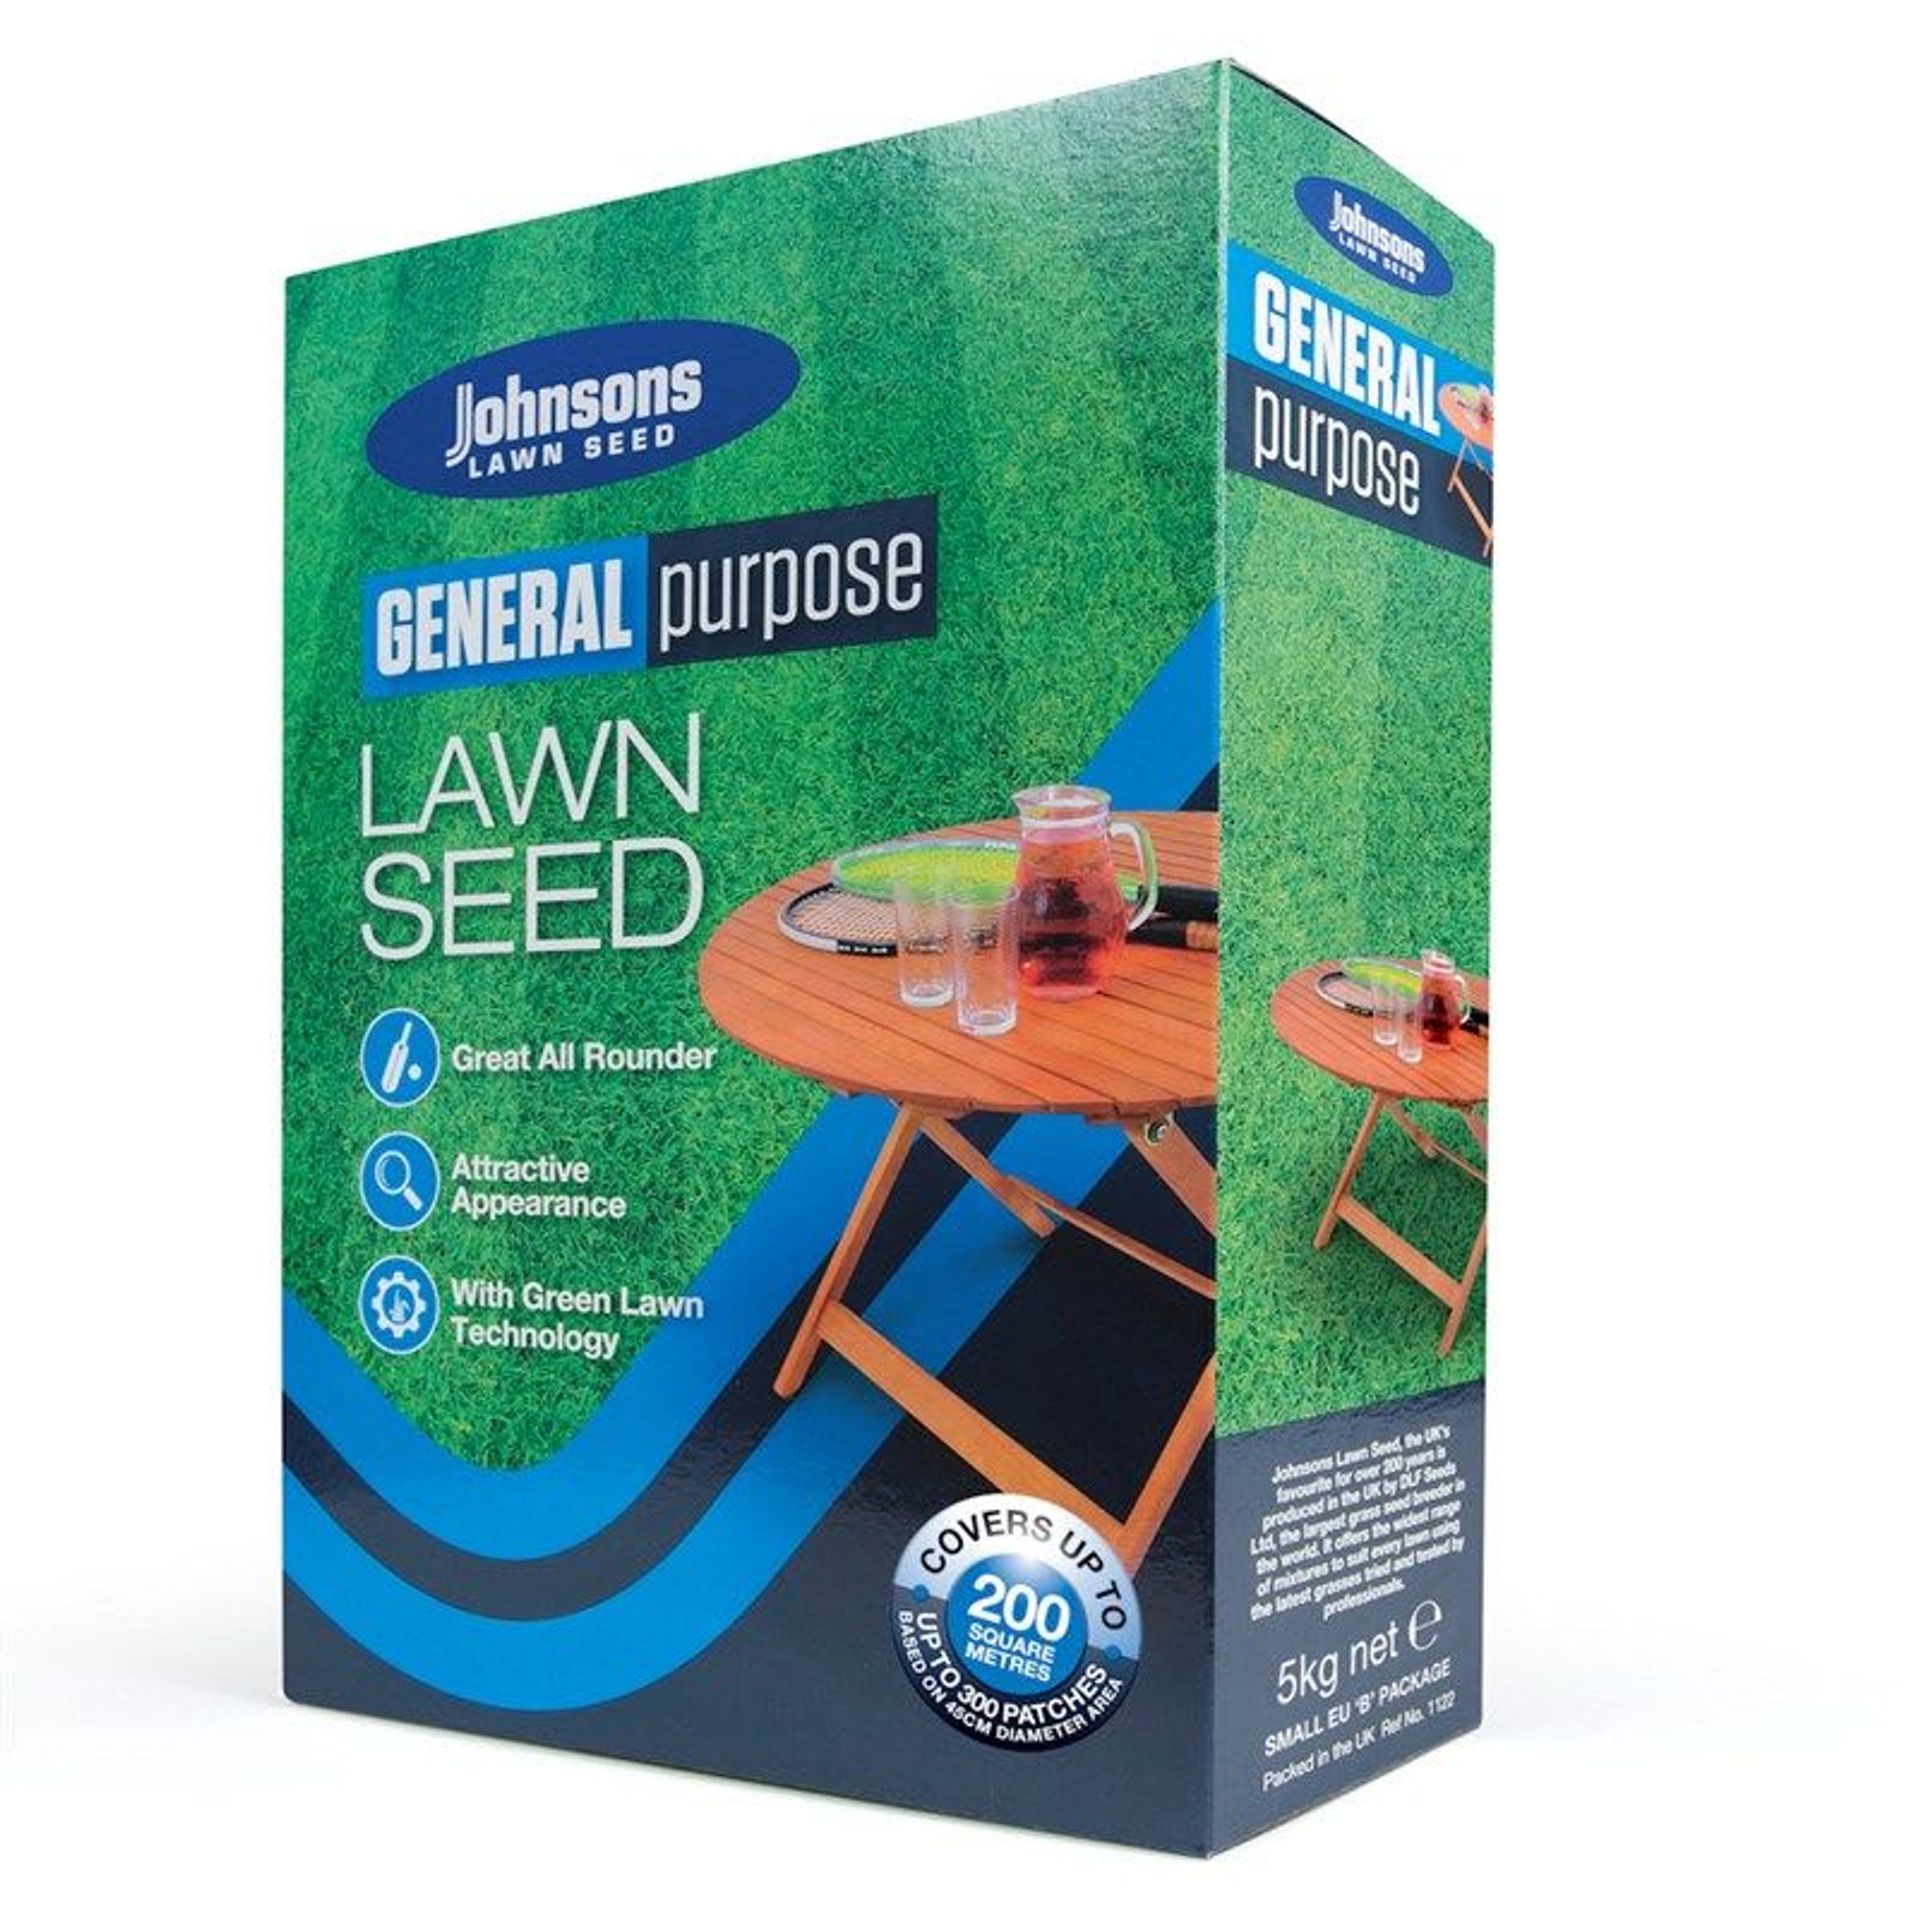 Johnsons General Purpose Lawn Seed